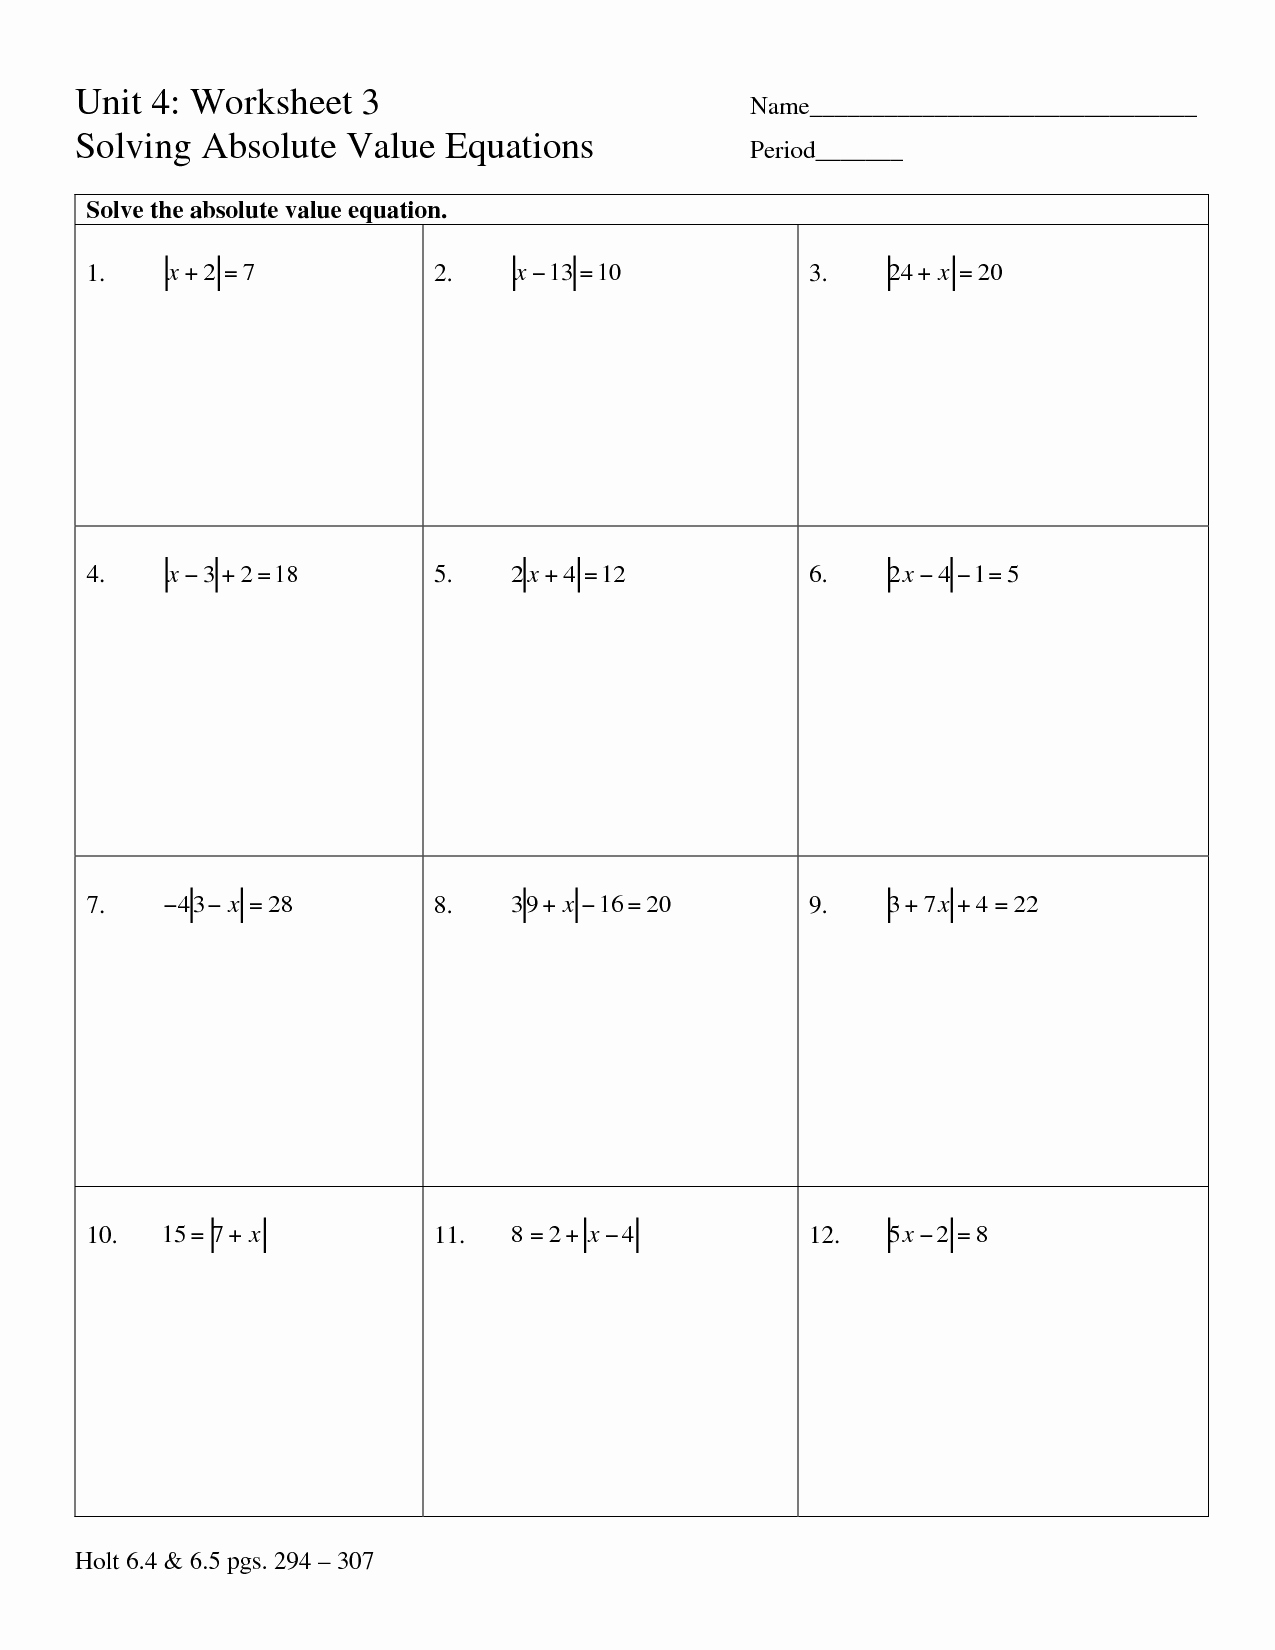 Solving Absolute Value Inequalities Worksheet Unique Worksheet solving Absolute Value Equations and